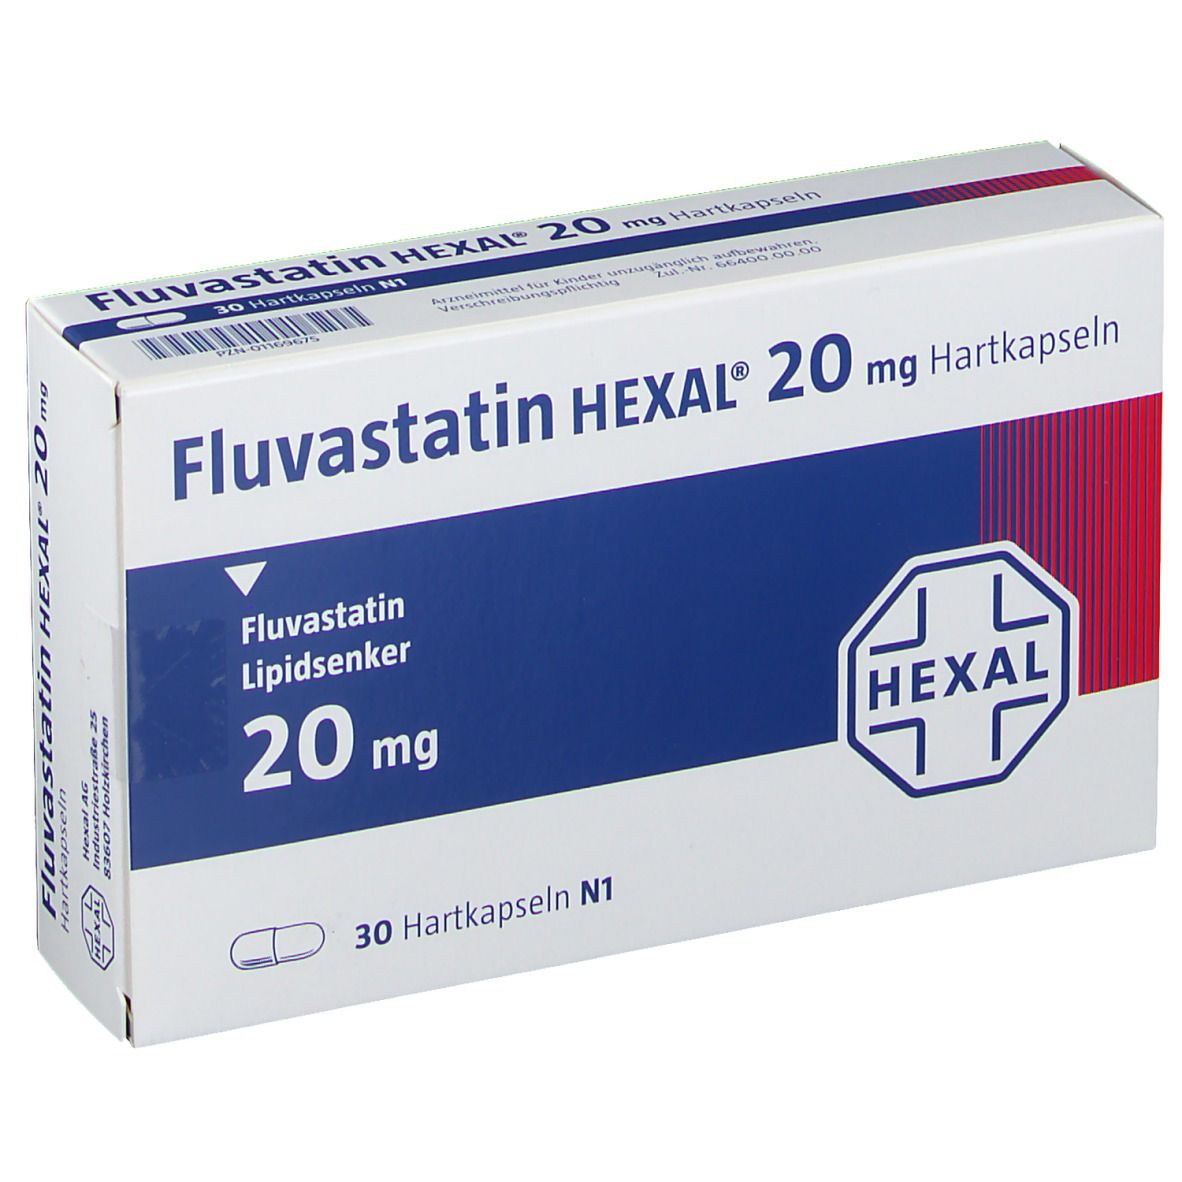 Fluvastatin HEXAL® 20 mg